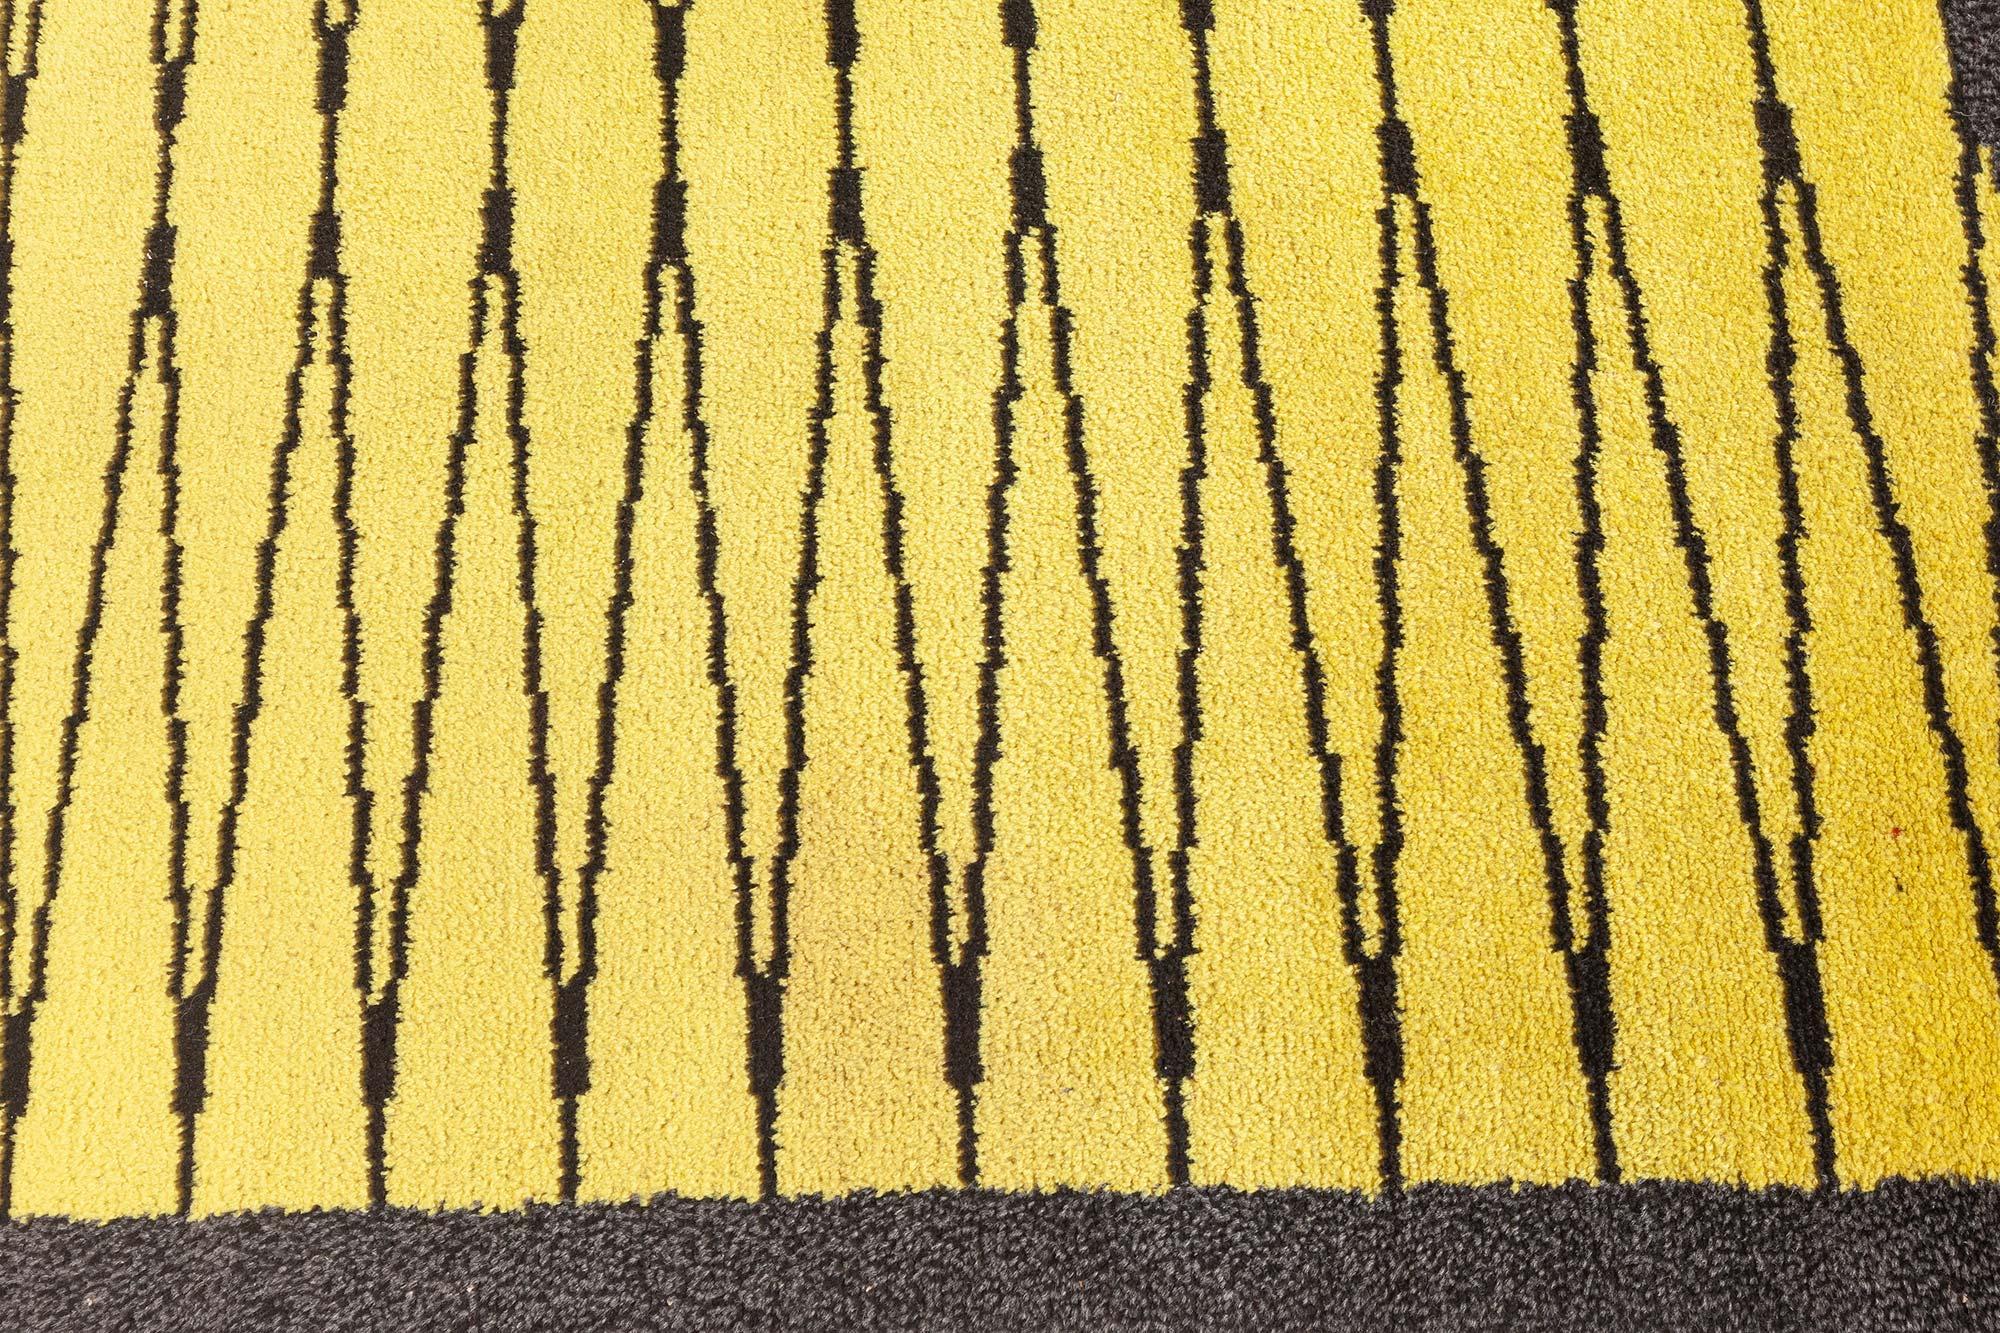 Vintage Swedish Yellow Black Pile Rug
Size: 4'3